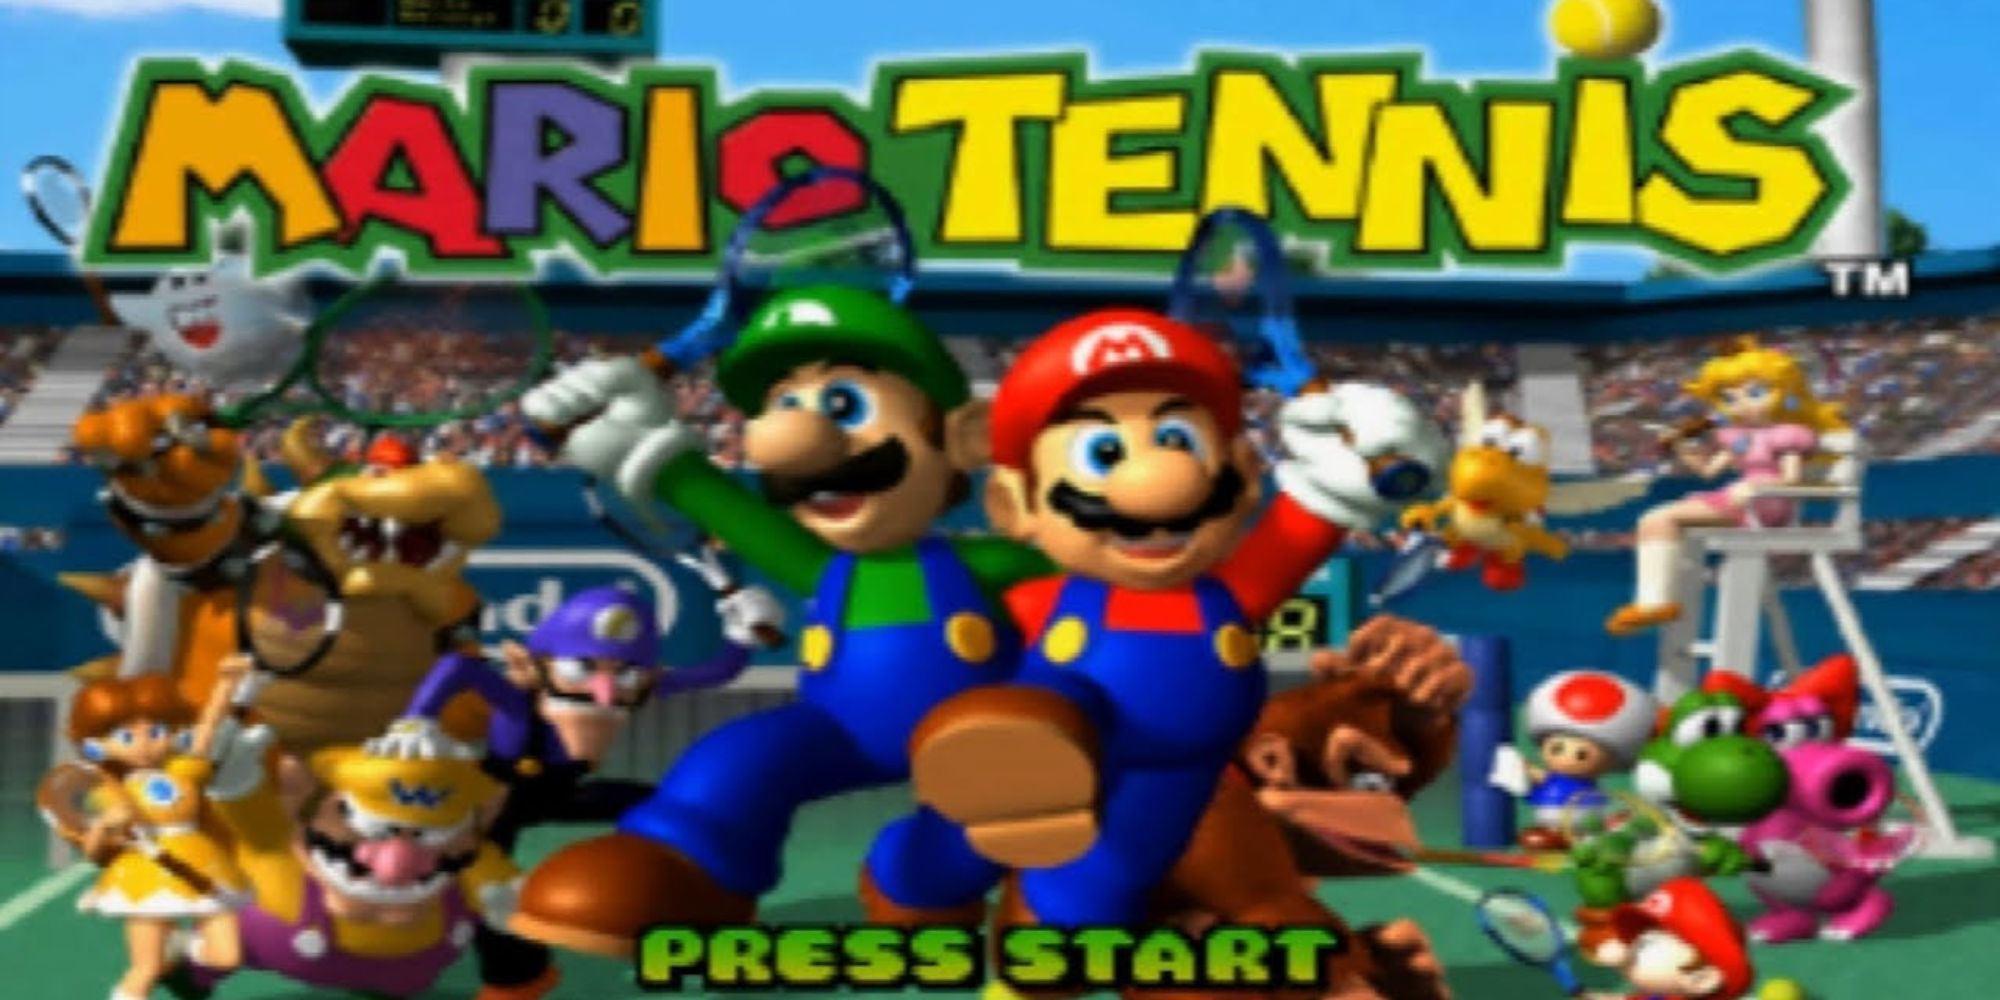 The Mario Tennis start screen